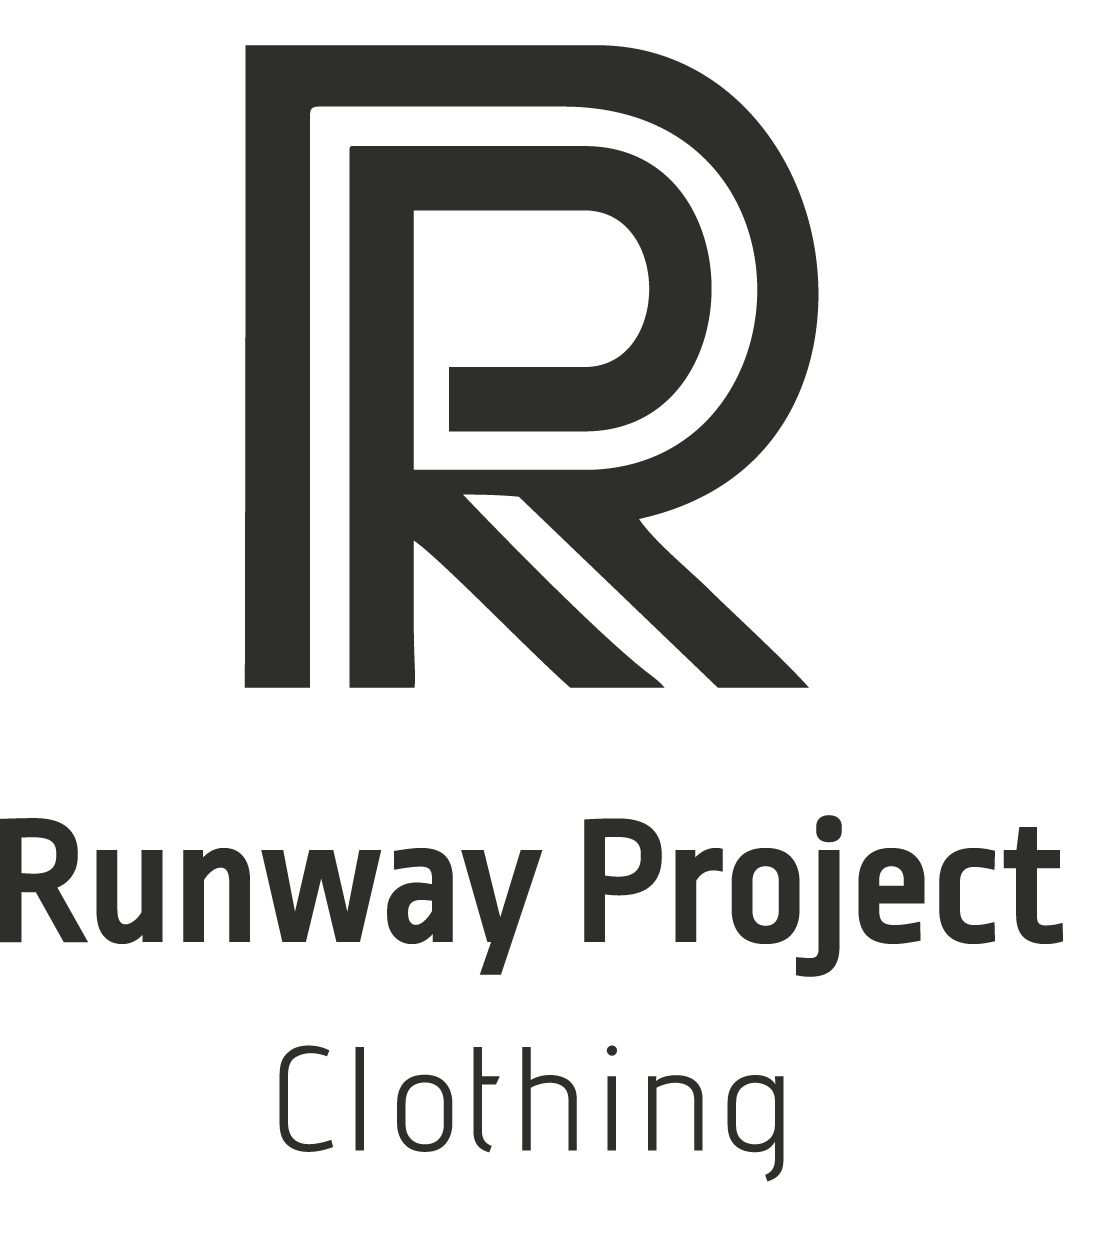 Runway Project